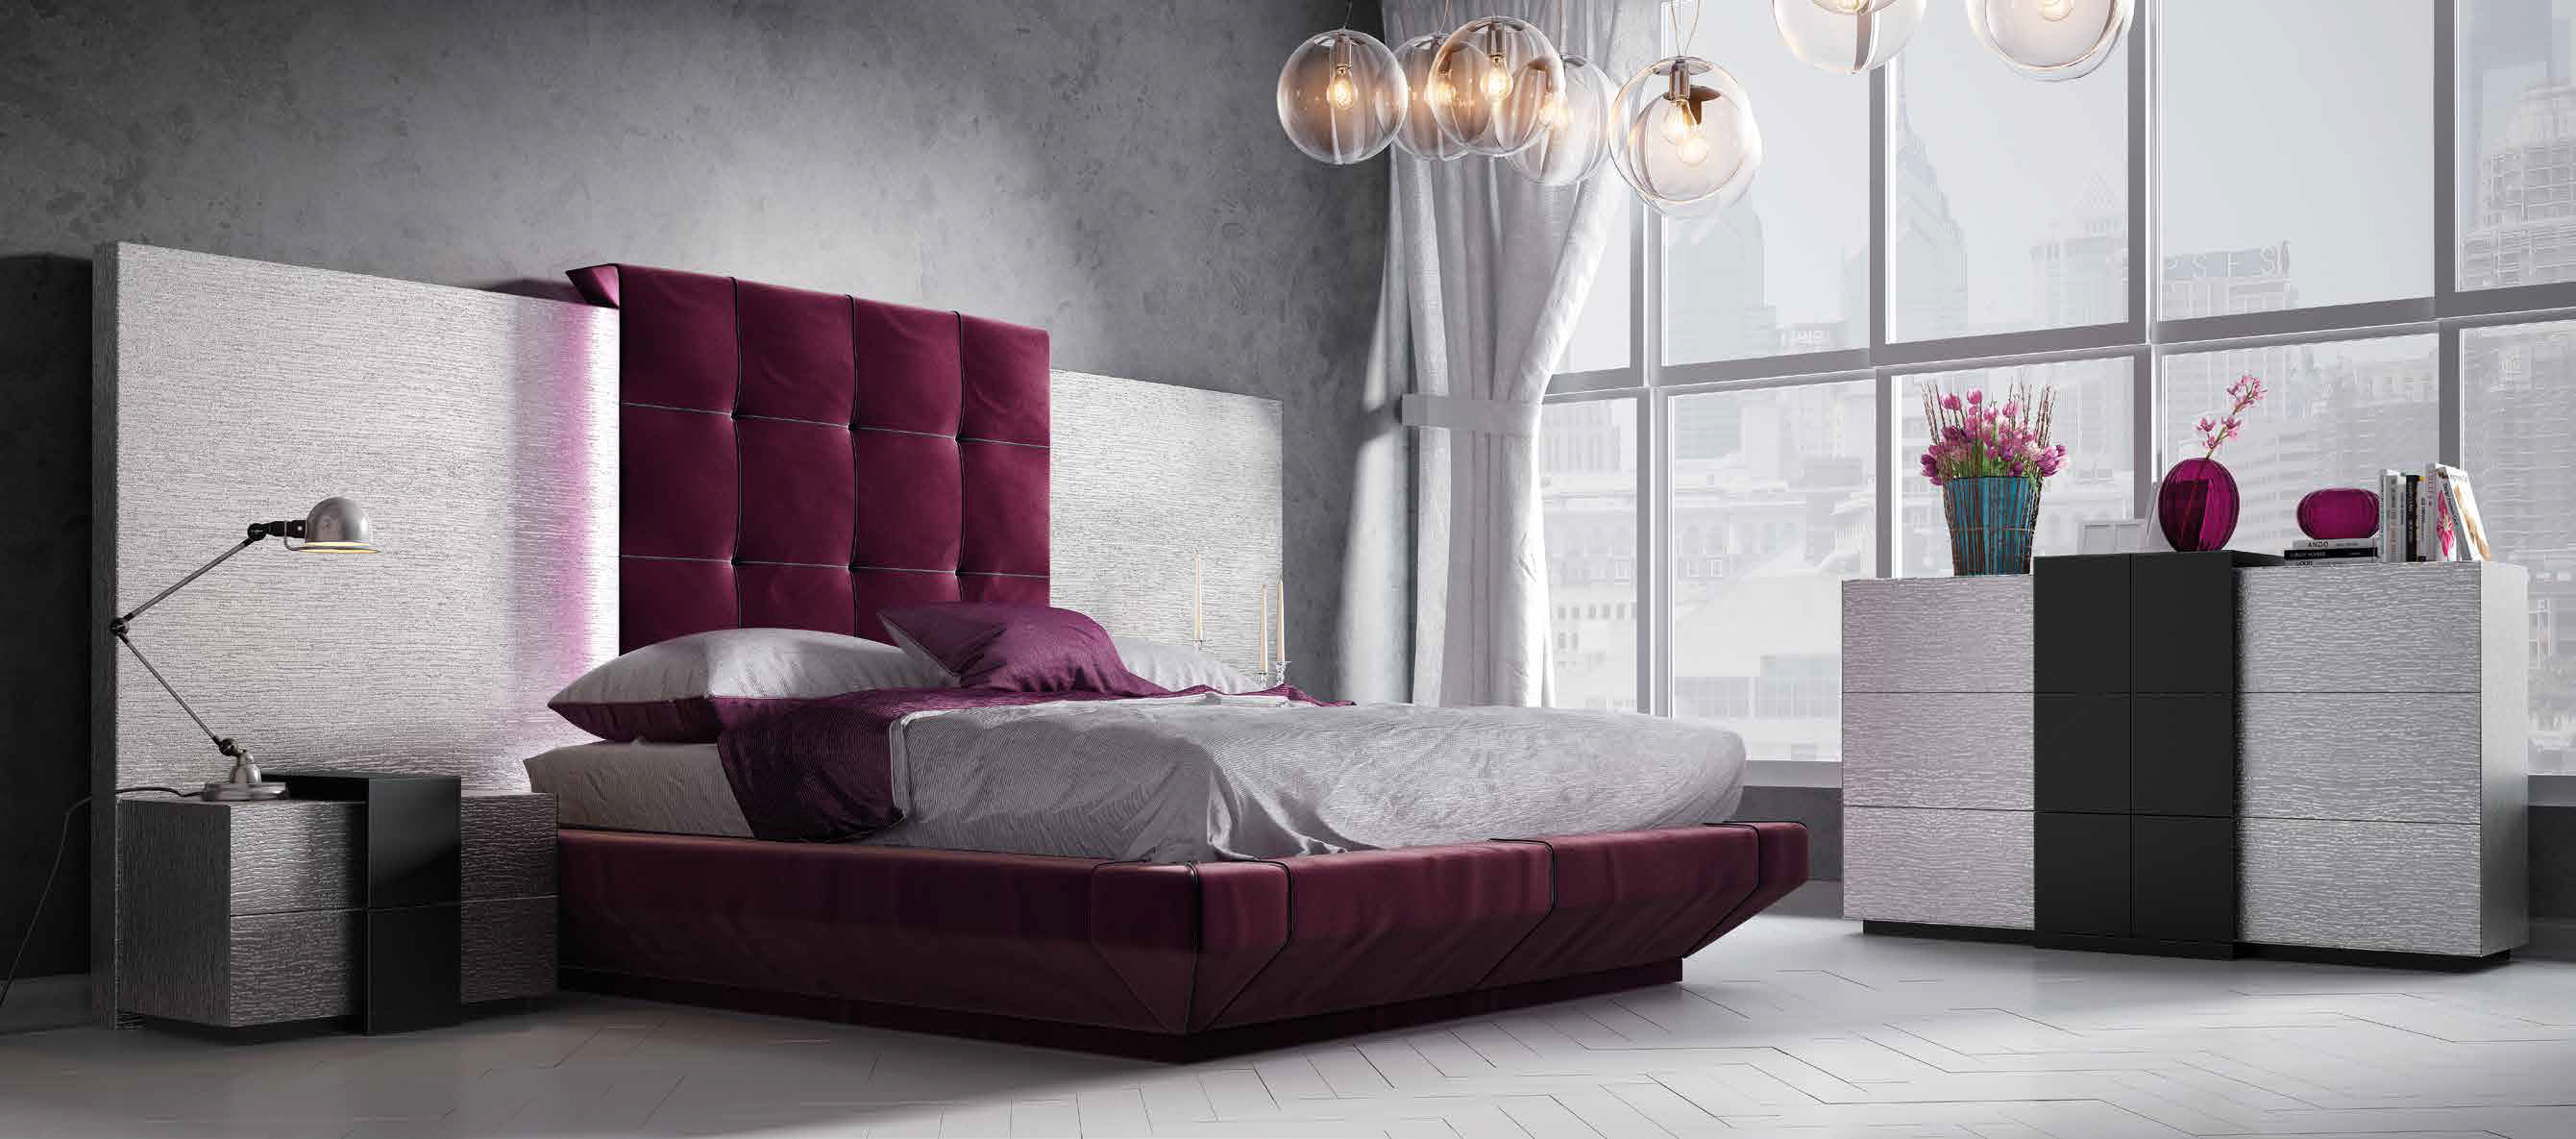 Brands Franco Furniture Bedrooms vol3, Spain DOR 08